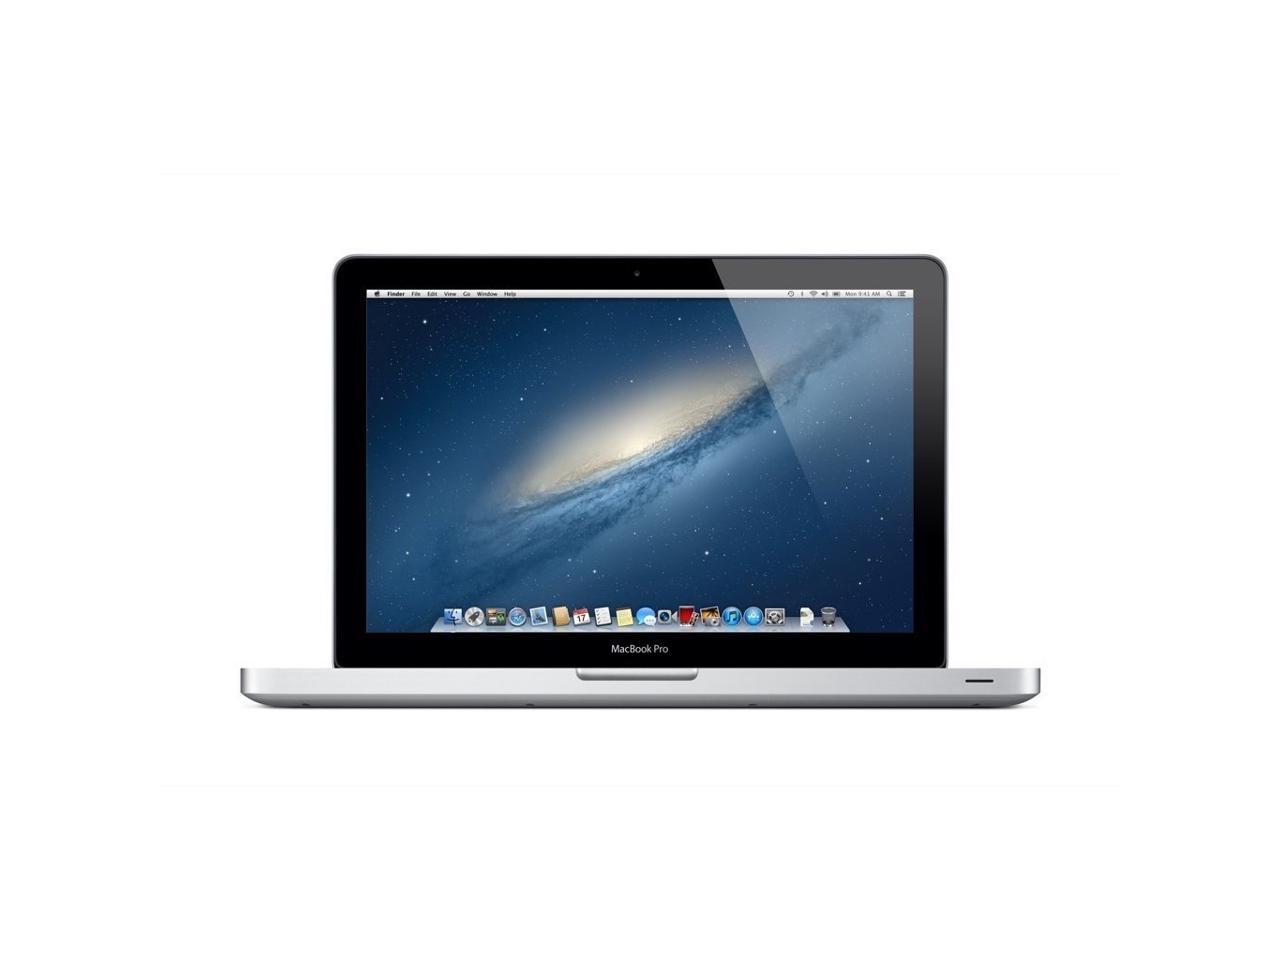 apple macbook pro 4gb 13 intel core i5 3210m